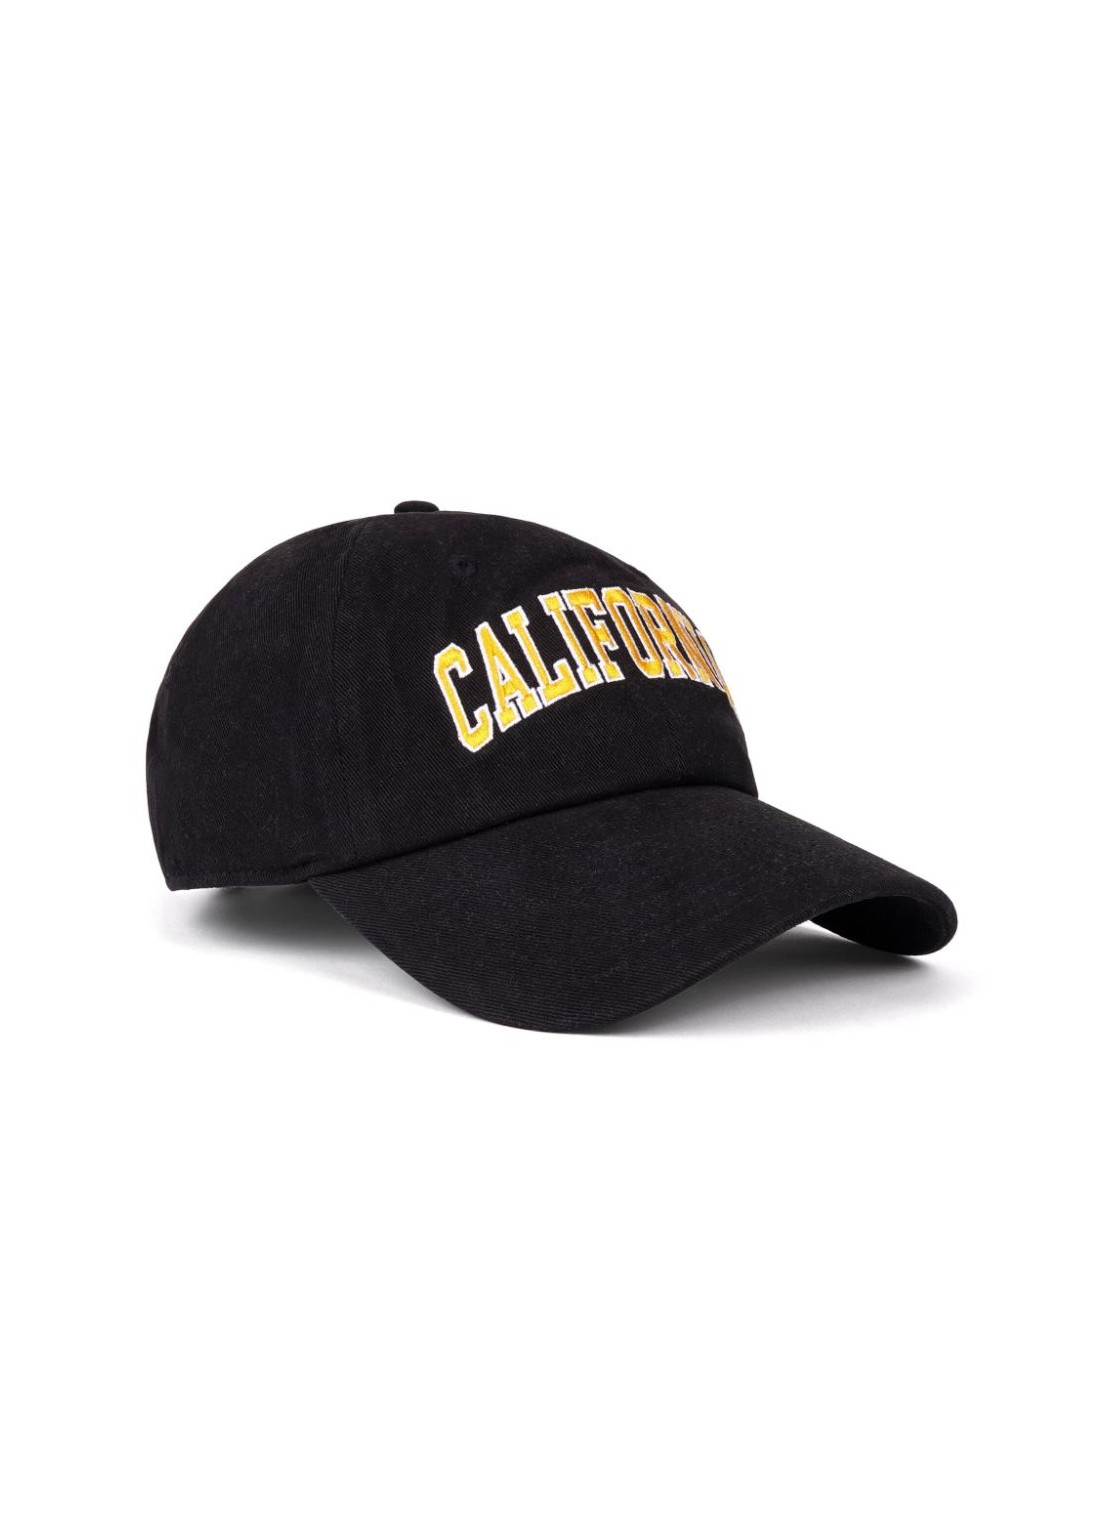 Gorras sporty & rich cap womancalifornia embroidered hat faded - ac039s405cf faded black talla T/U
 